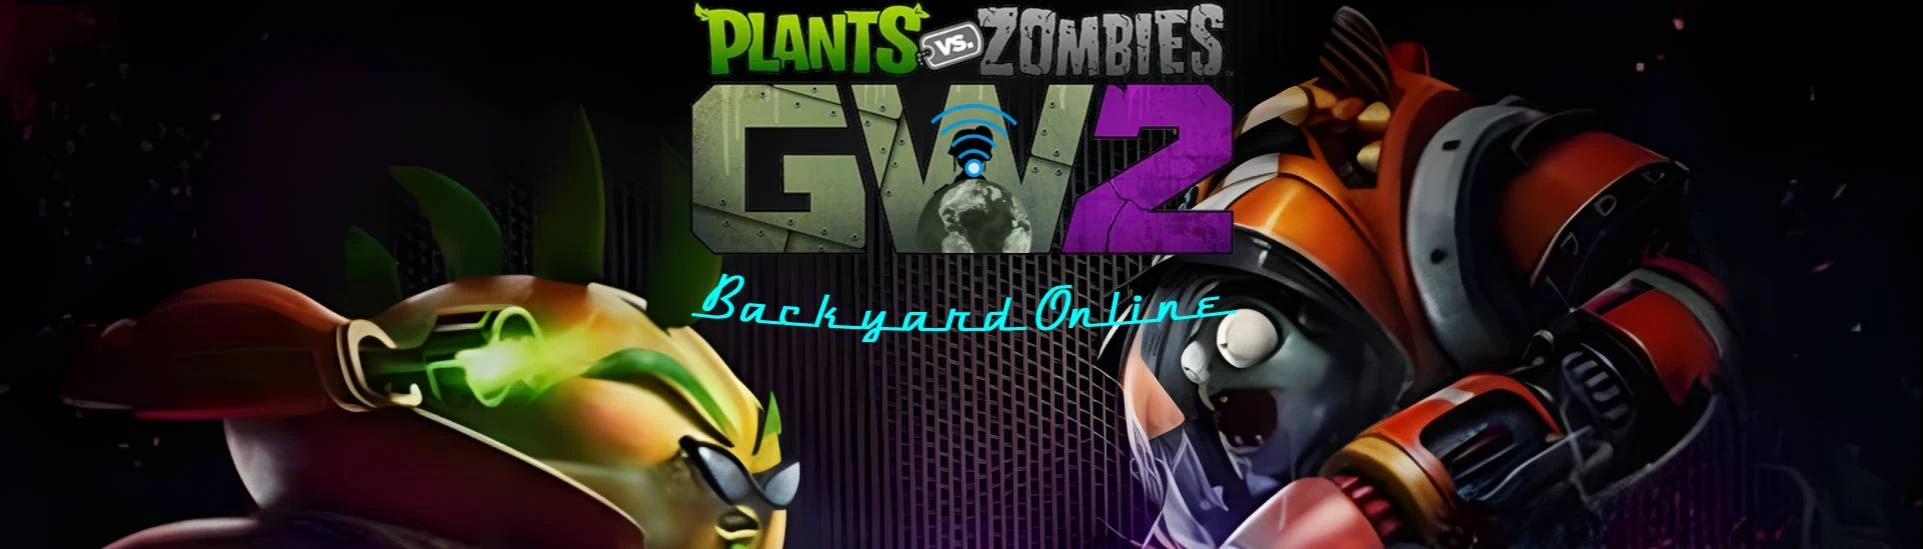 Backyard Battleground, Plants vs. Zombies Wiki